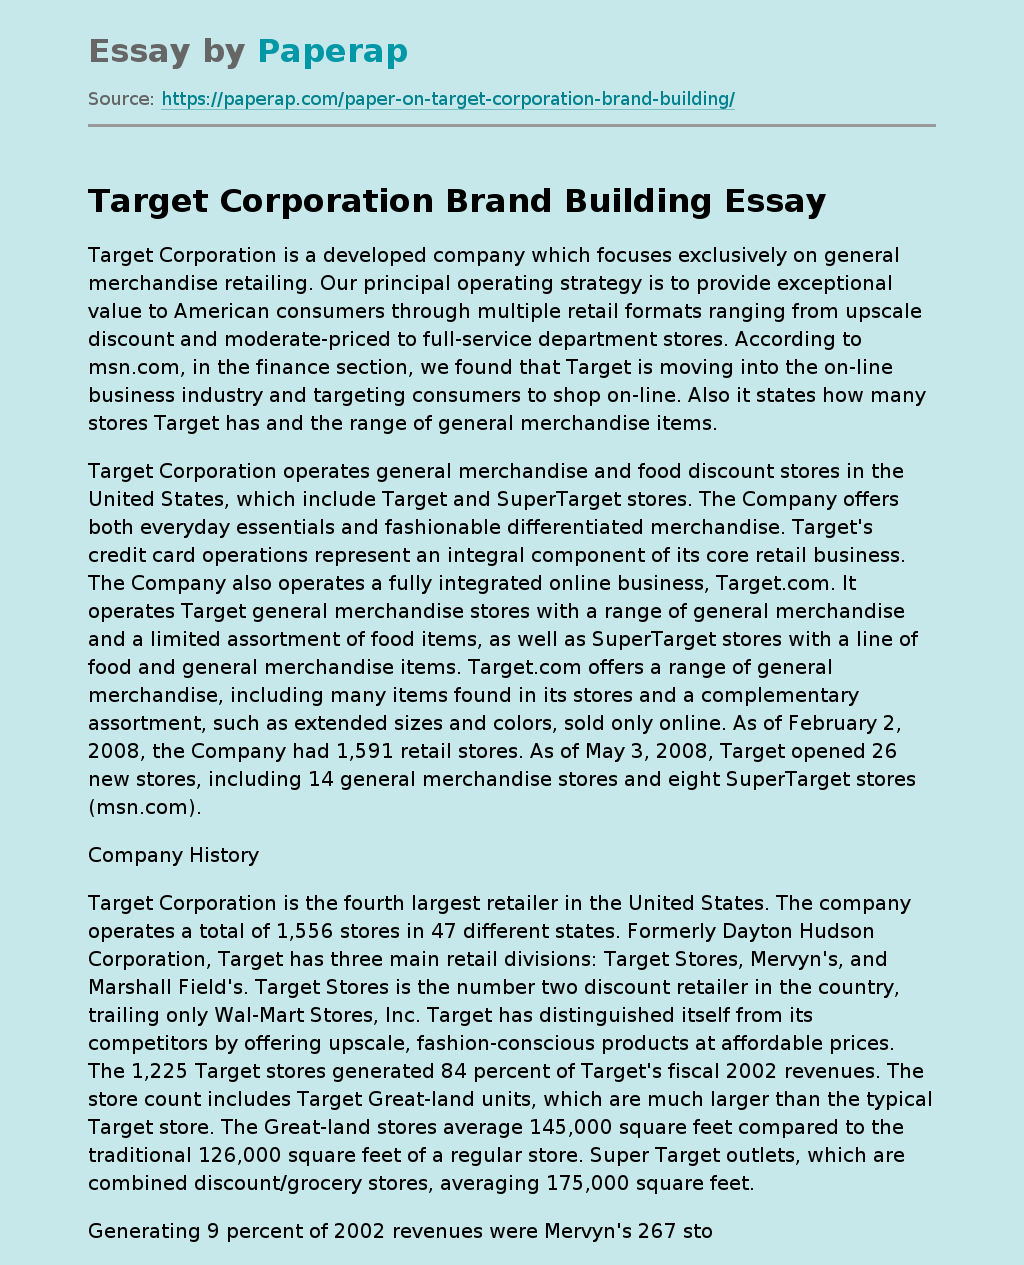 Target Corporation Brand Building